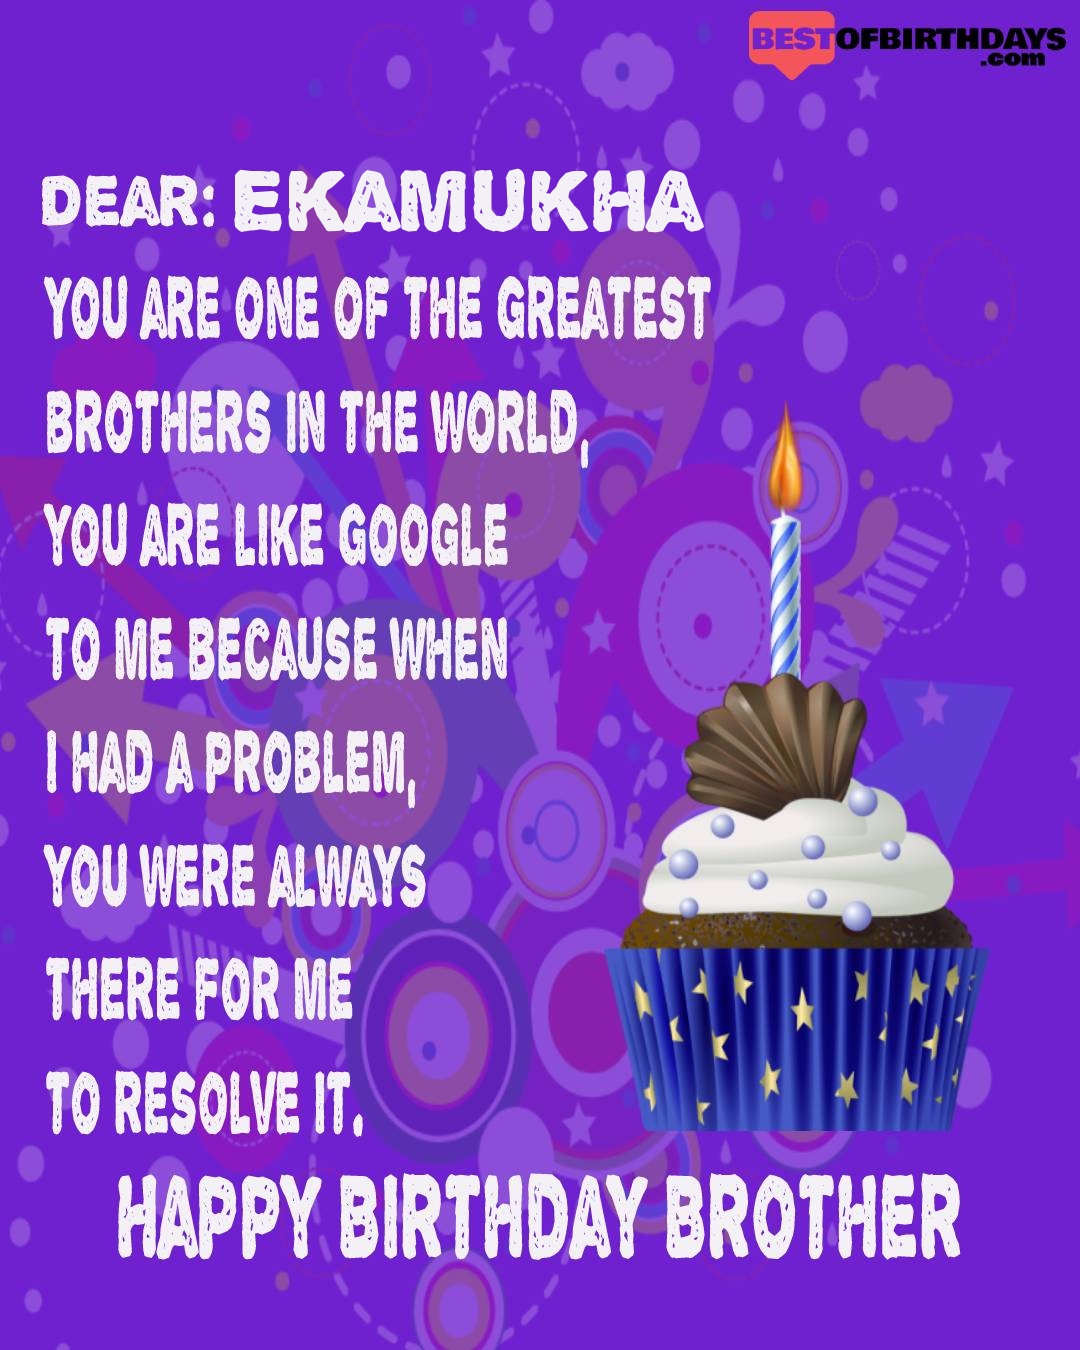 Happy birthday ekamukha bhai brother bro